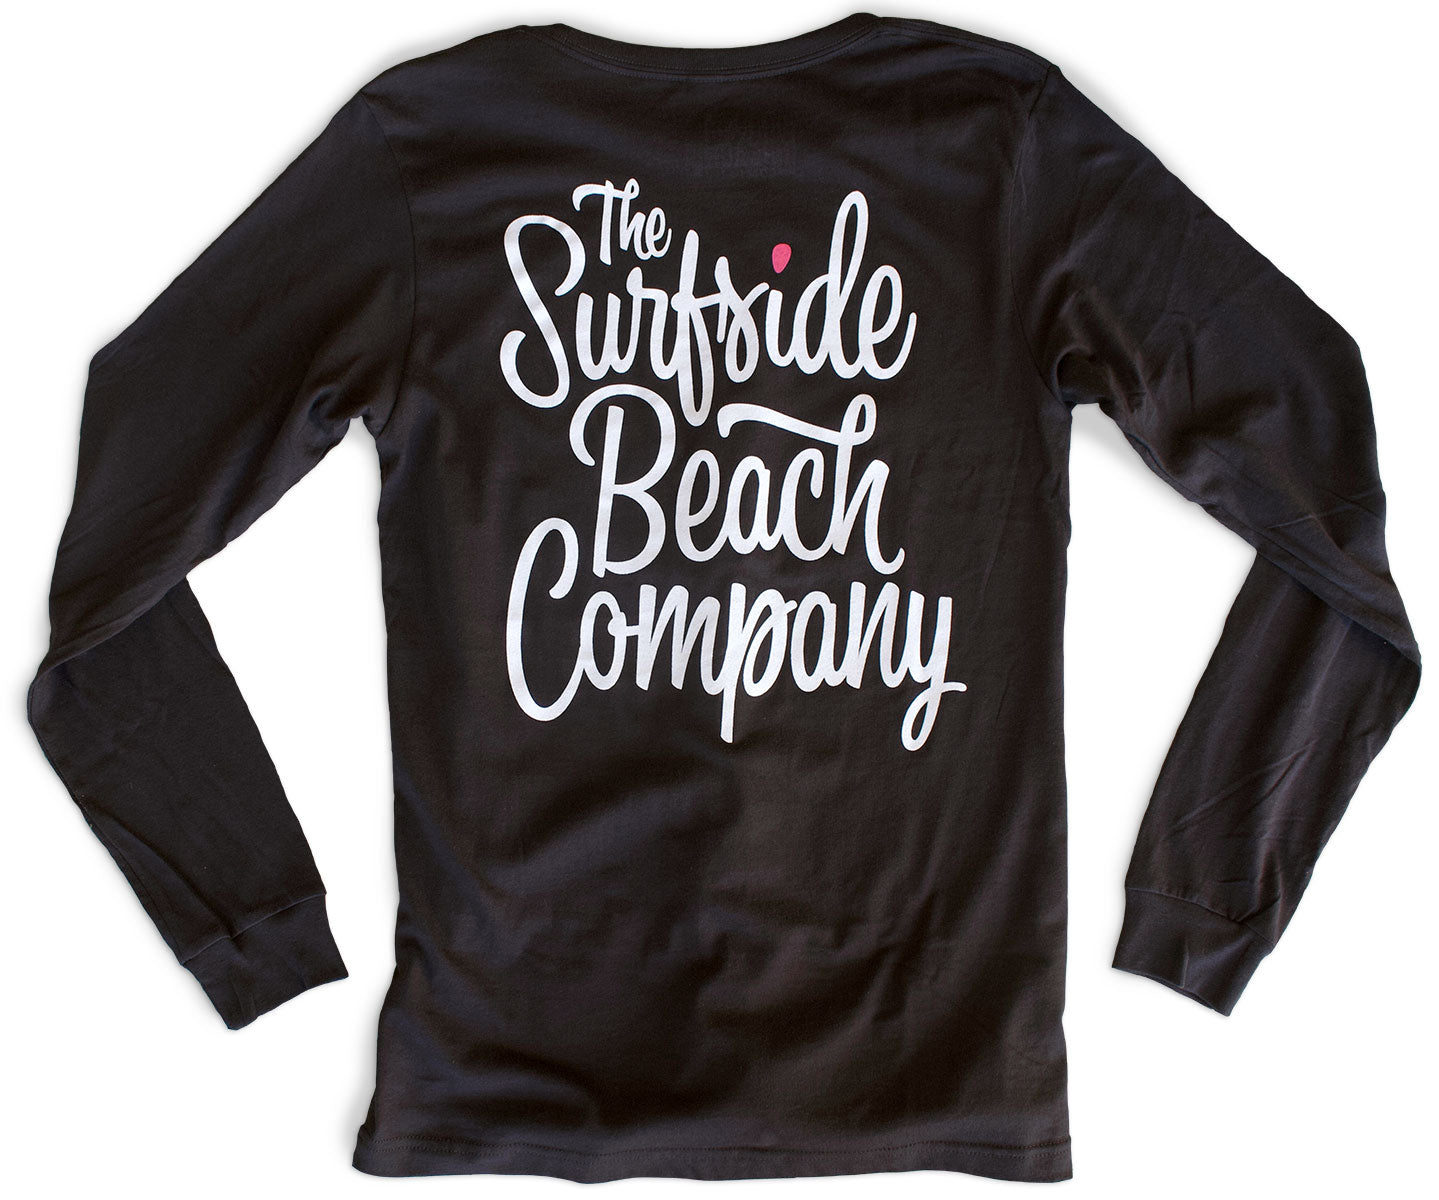 The Beach Company: T-Shirt